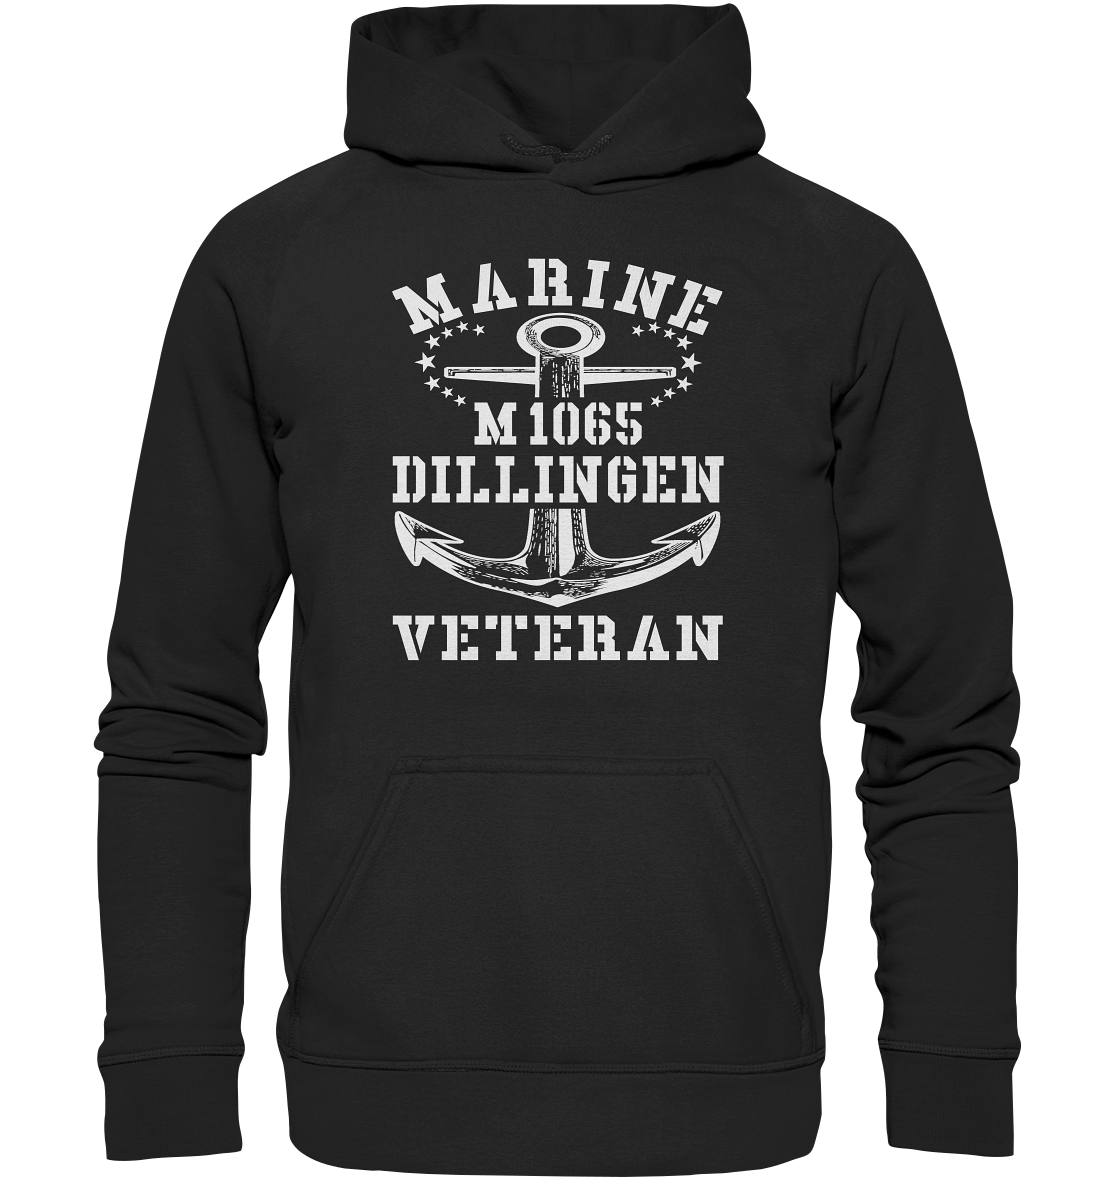 Mij.-Boot M1065 DILLINGEN Marine Veteran  - Basic Unisex Hoodie XL